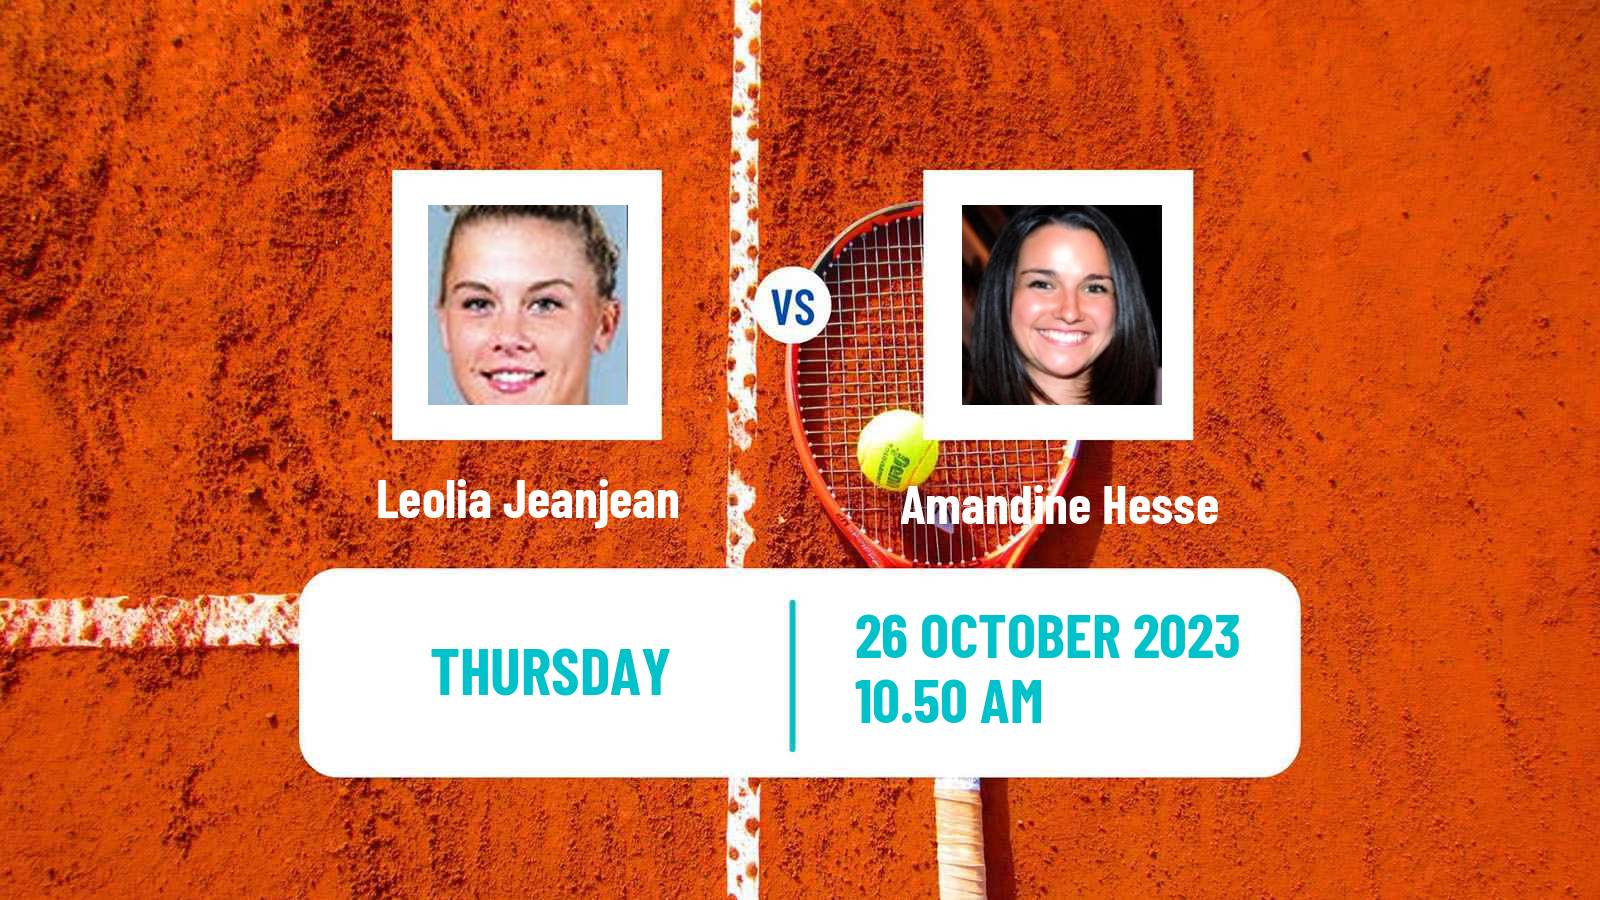 Tennis ITF W80 Poitiers Women Leolia Jeanjean - Amandine Hesse